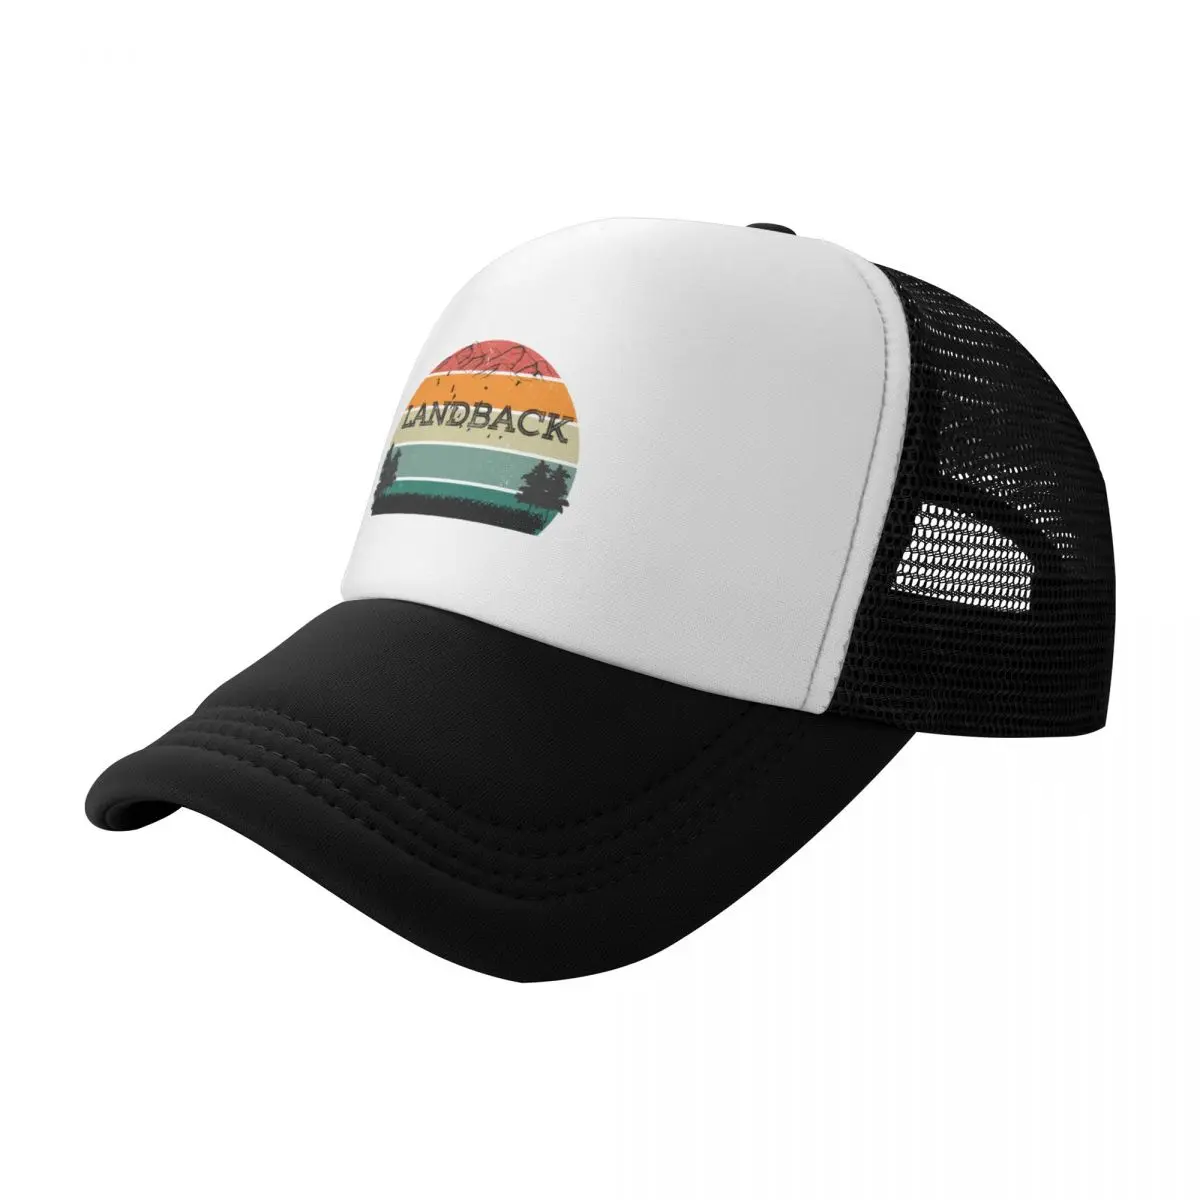 

LANDBACK | Landback Movement | Baseball Cap funny hat Bobble Hat Women's Golf Wear Men's